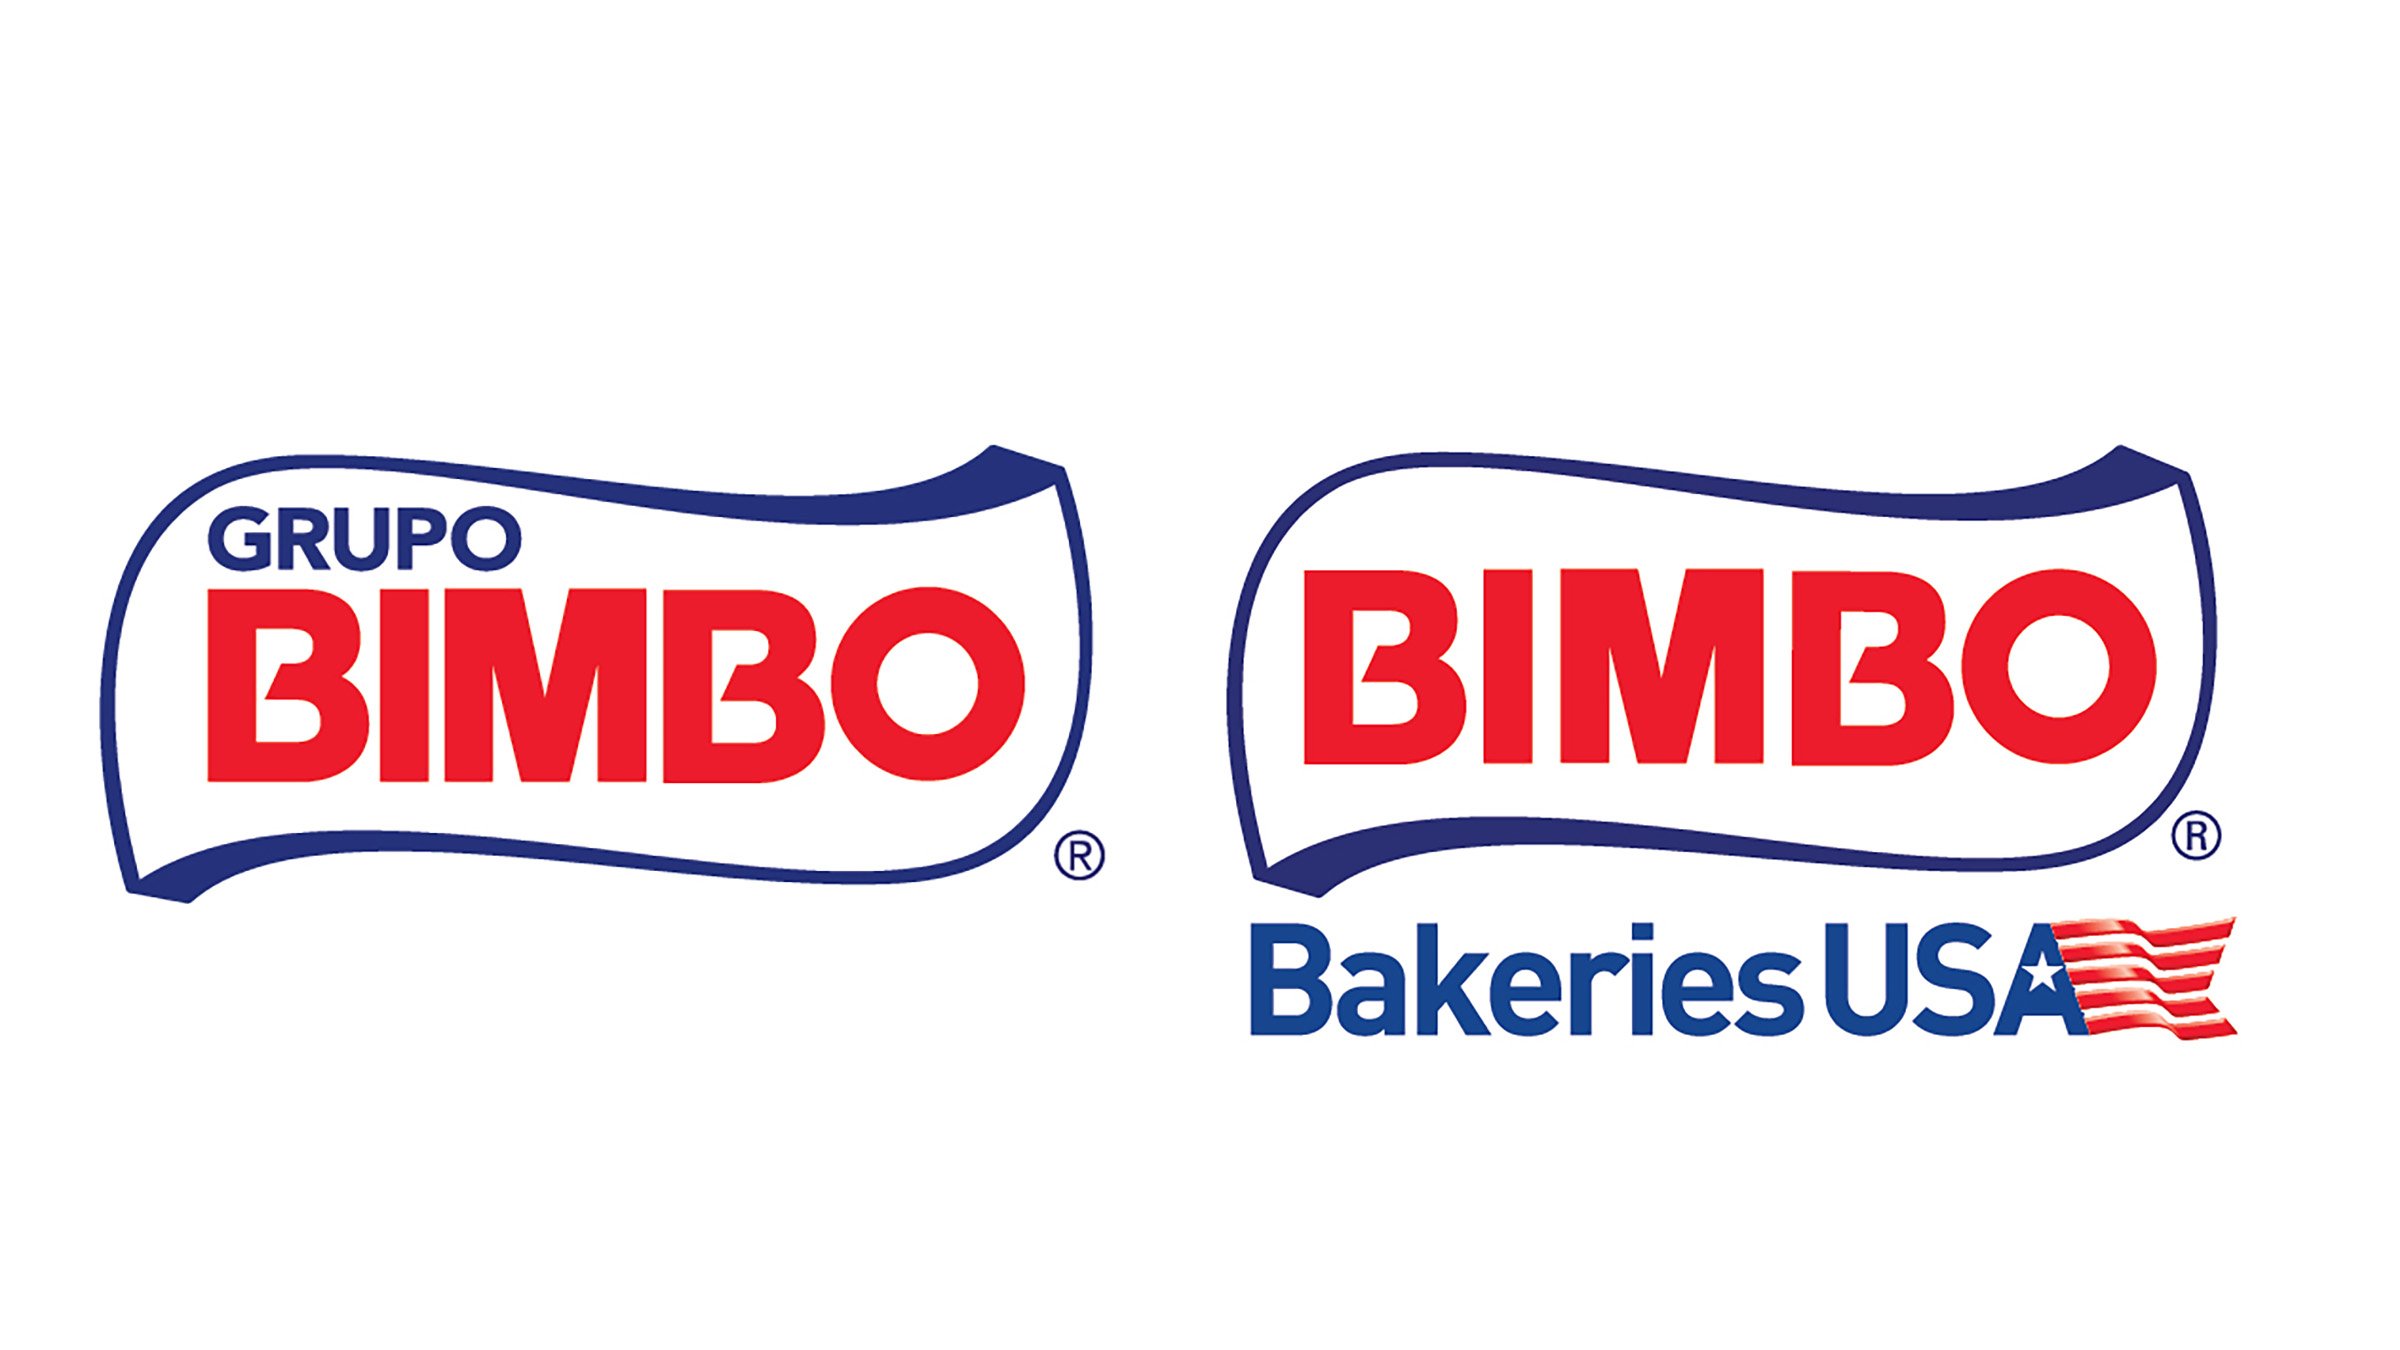 GRUPO BIMBO and BIMBO Bakeries USA lockup